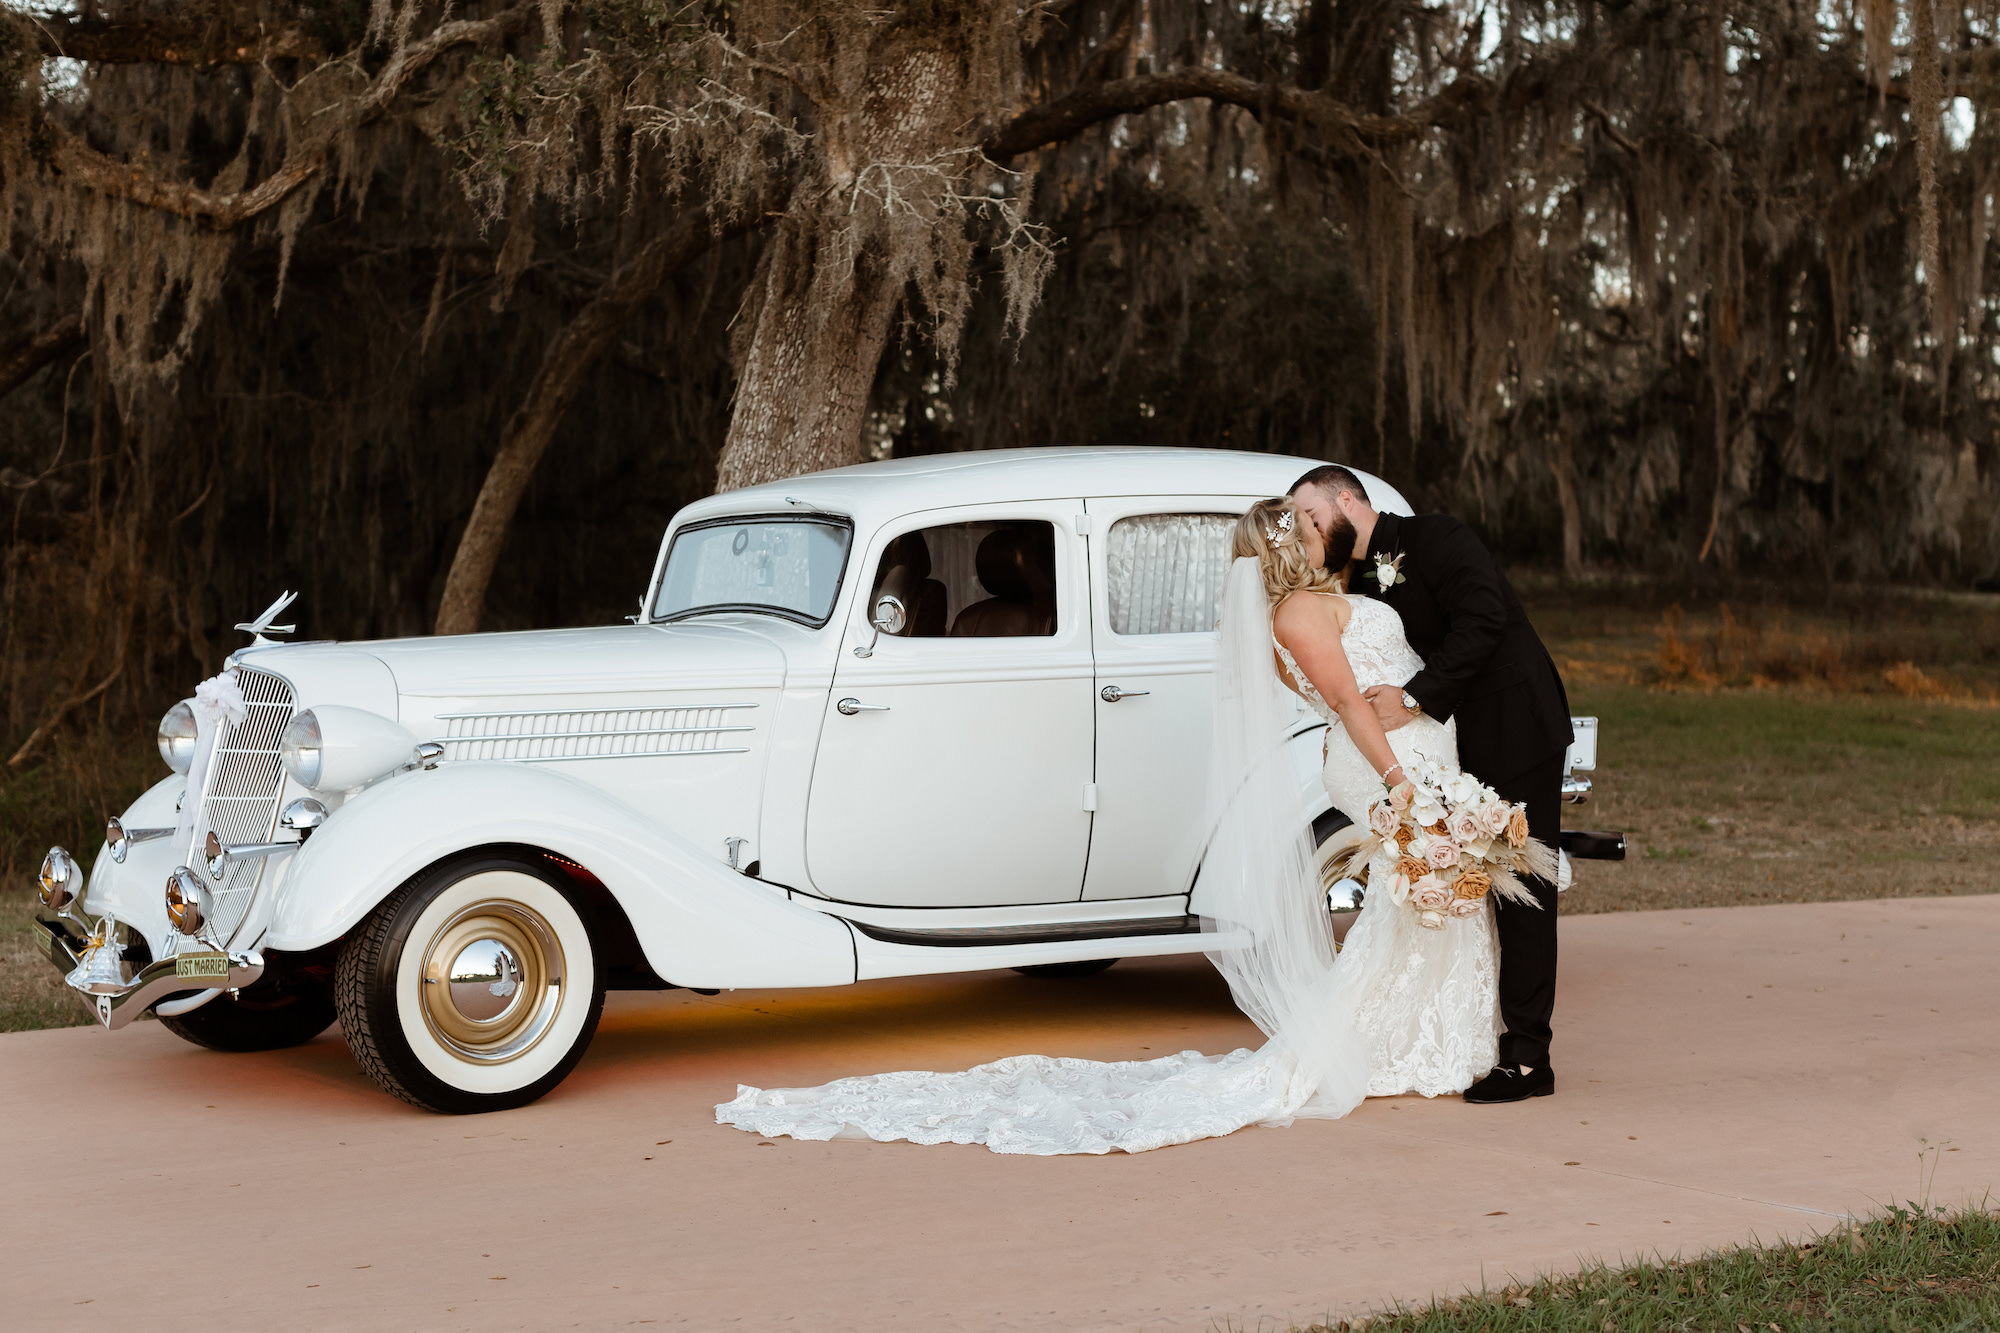 Romantic Bride and Groom Kiss Wedding Portrait | Vintage Car Wedding Transportation